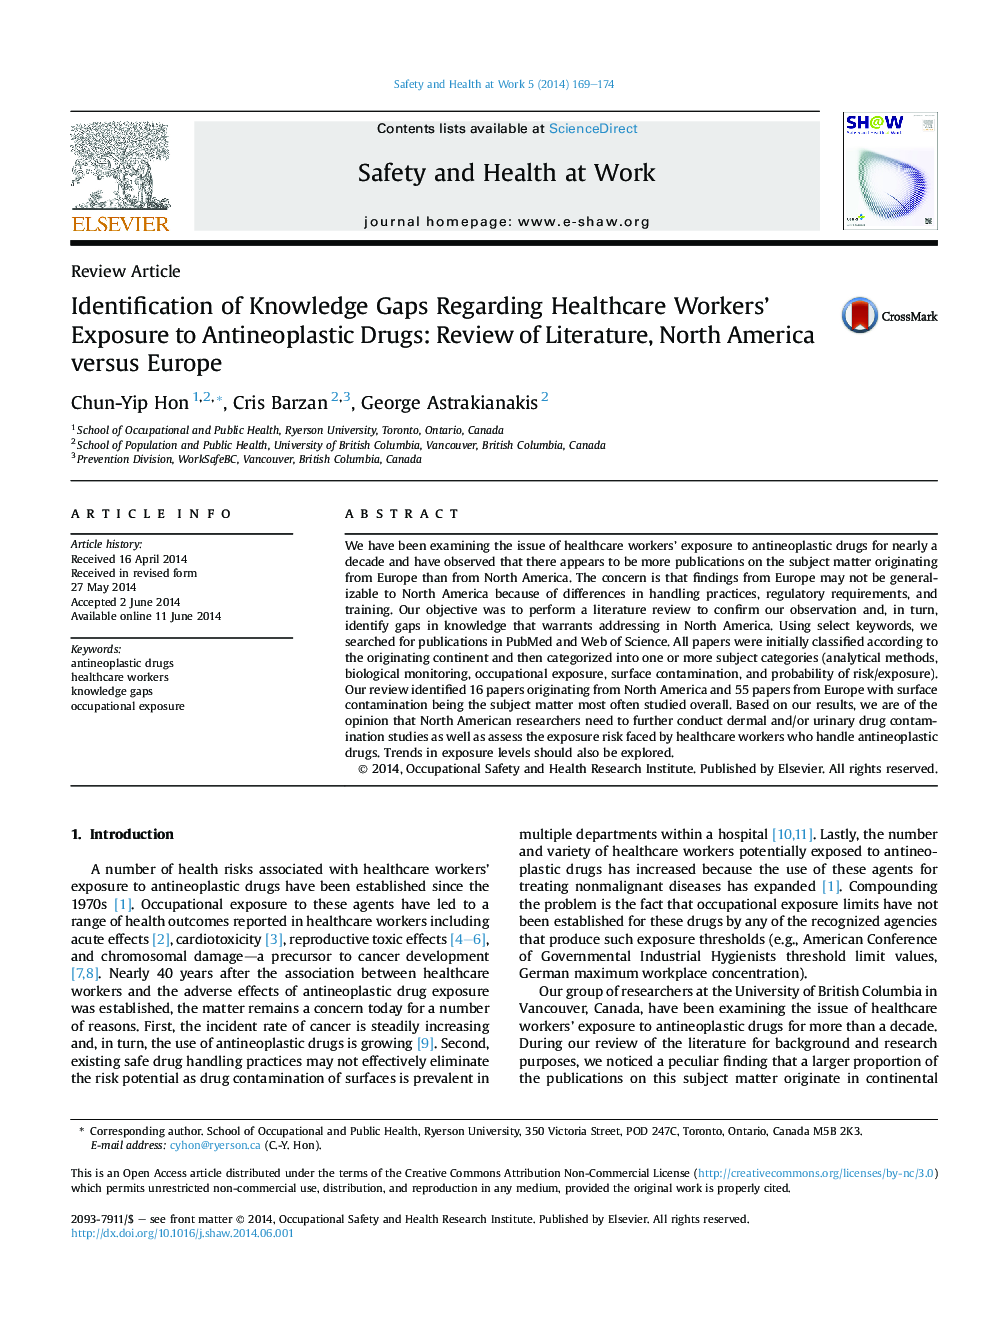 Identification of Knowledge Gaps Regarding Healthcare Workers' Exposure to Antineoplastic Drugs: Review of Literature, North America versus Europe 